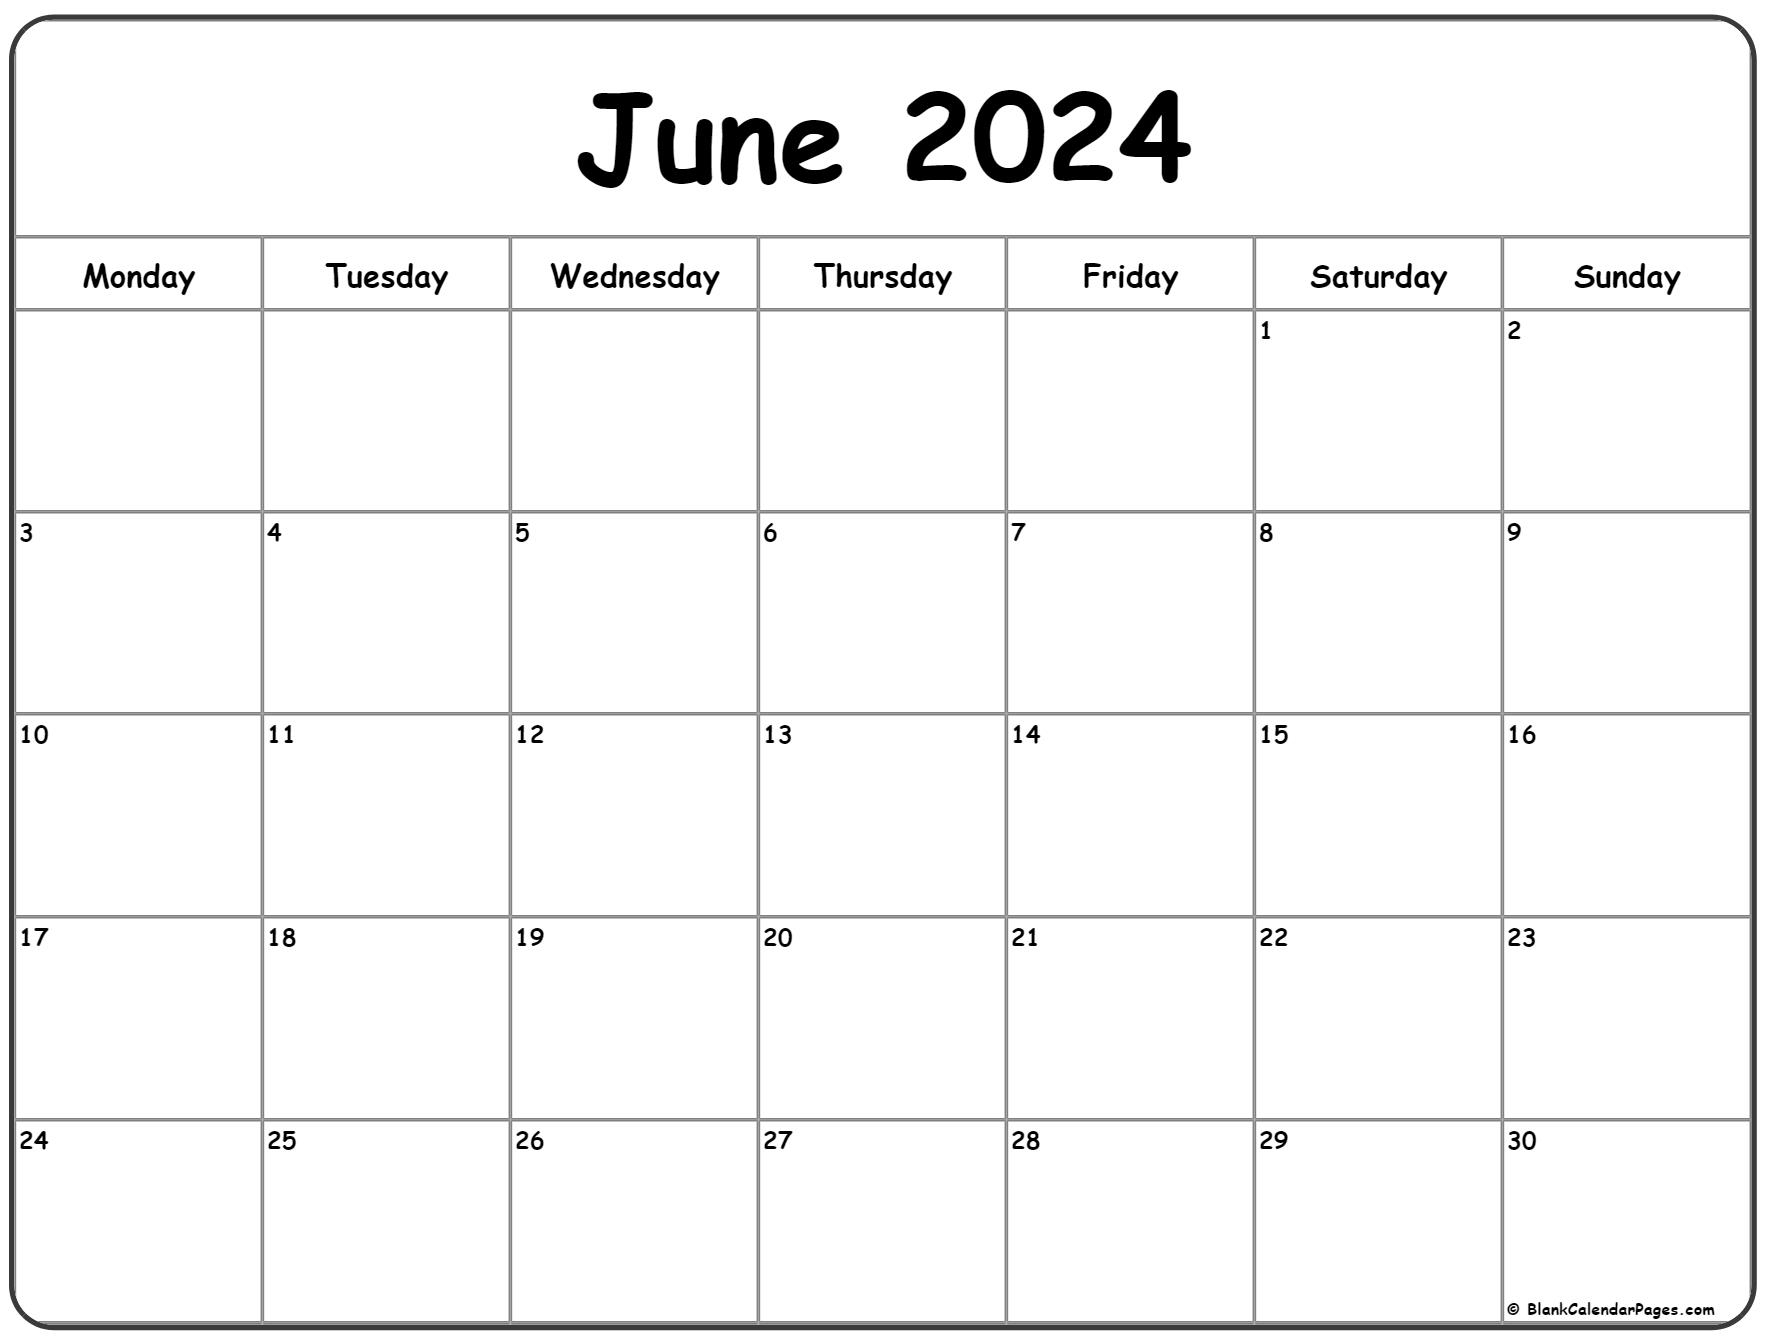 June 2021 Monday Calendar | Monday to Sunday